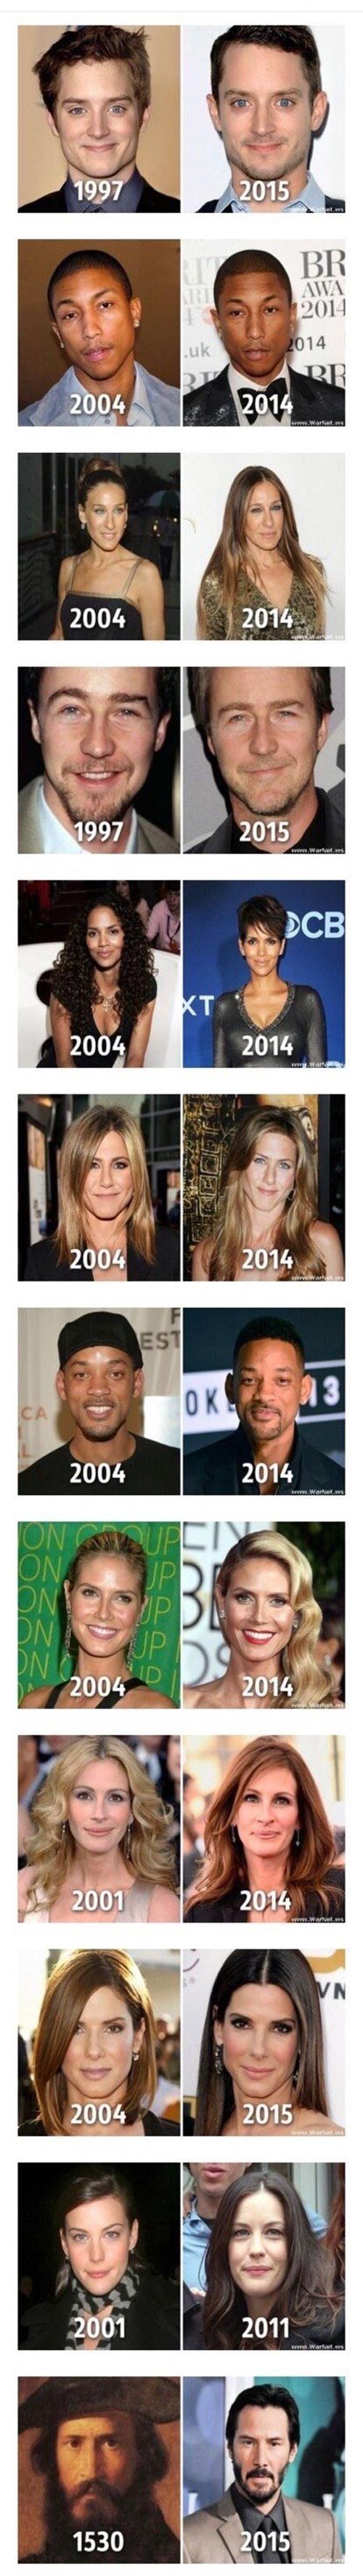 Age-Defying Celebrities